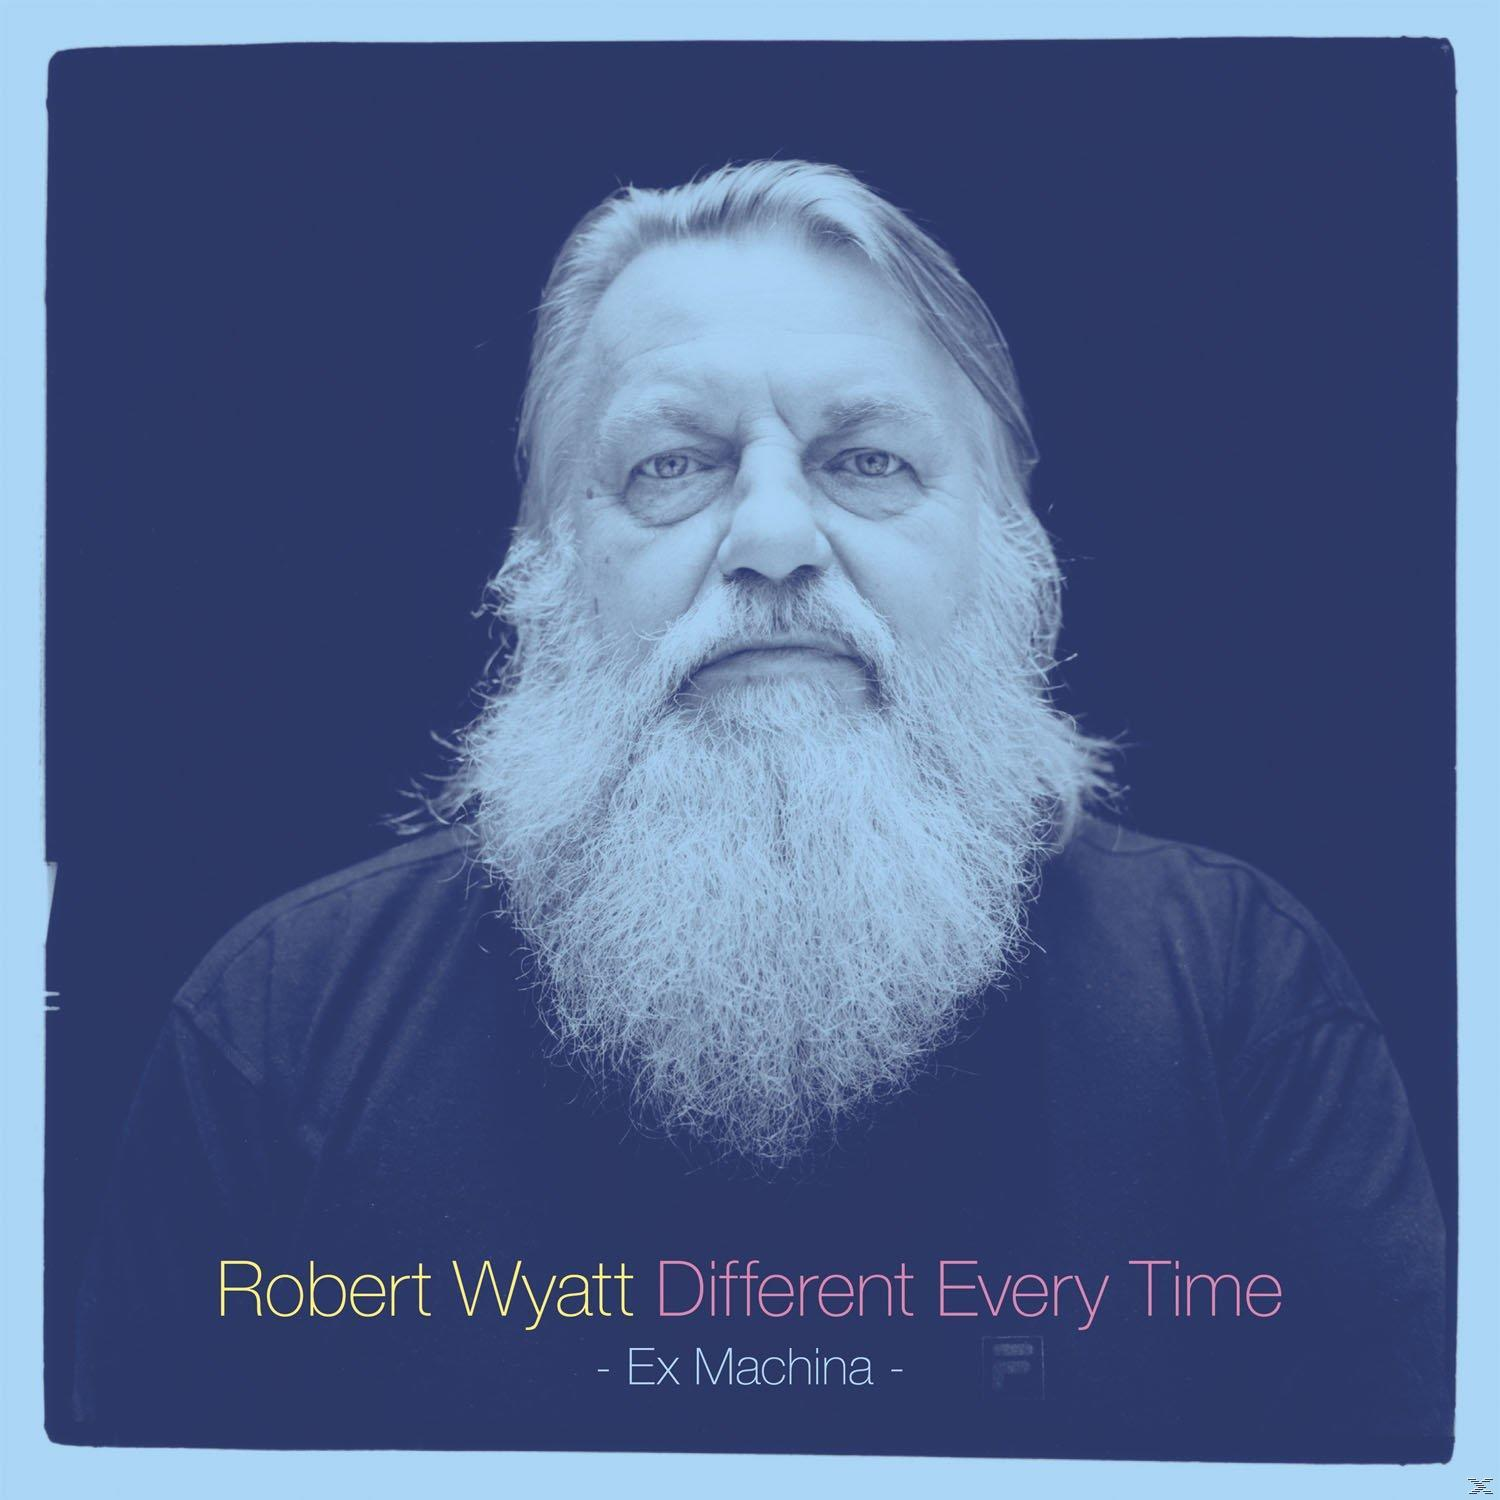 Robert Wyatt - Different - + Machina Ex - Time Every 1 Volume Download) (LP